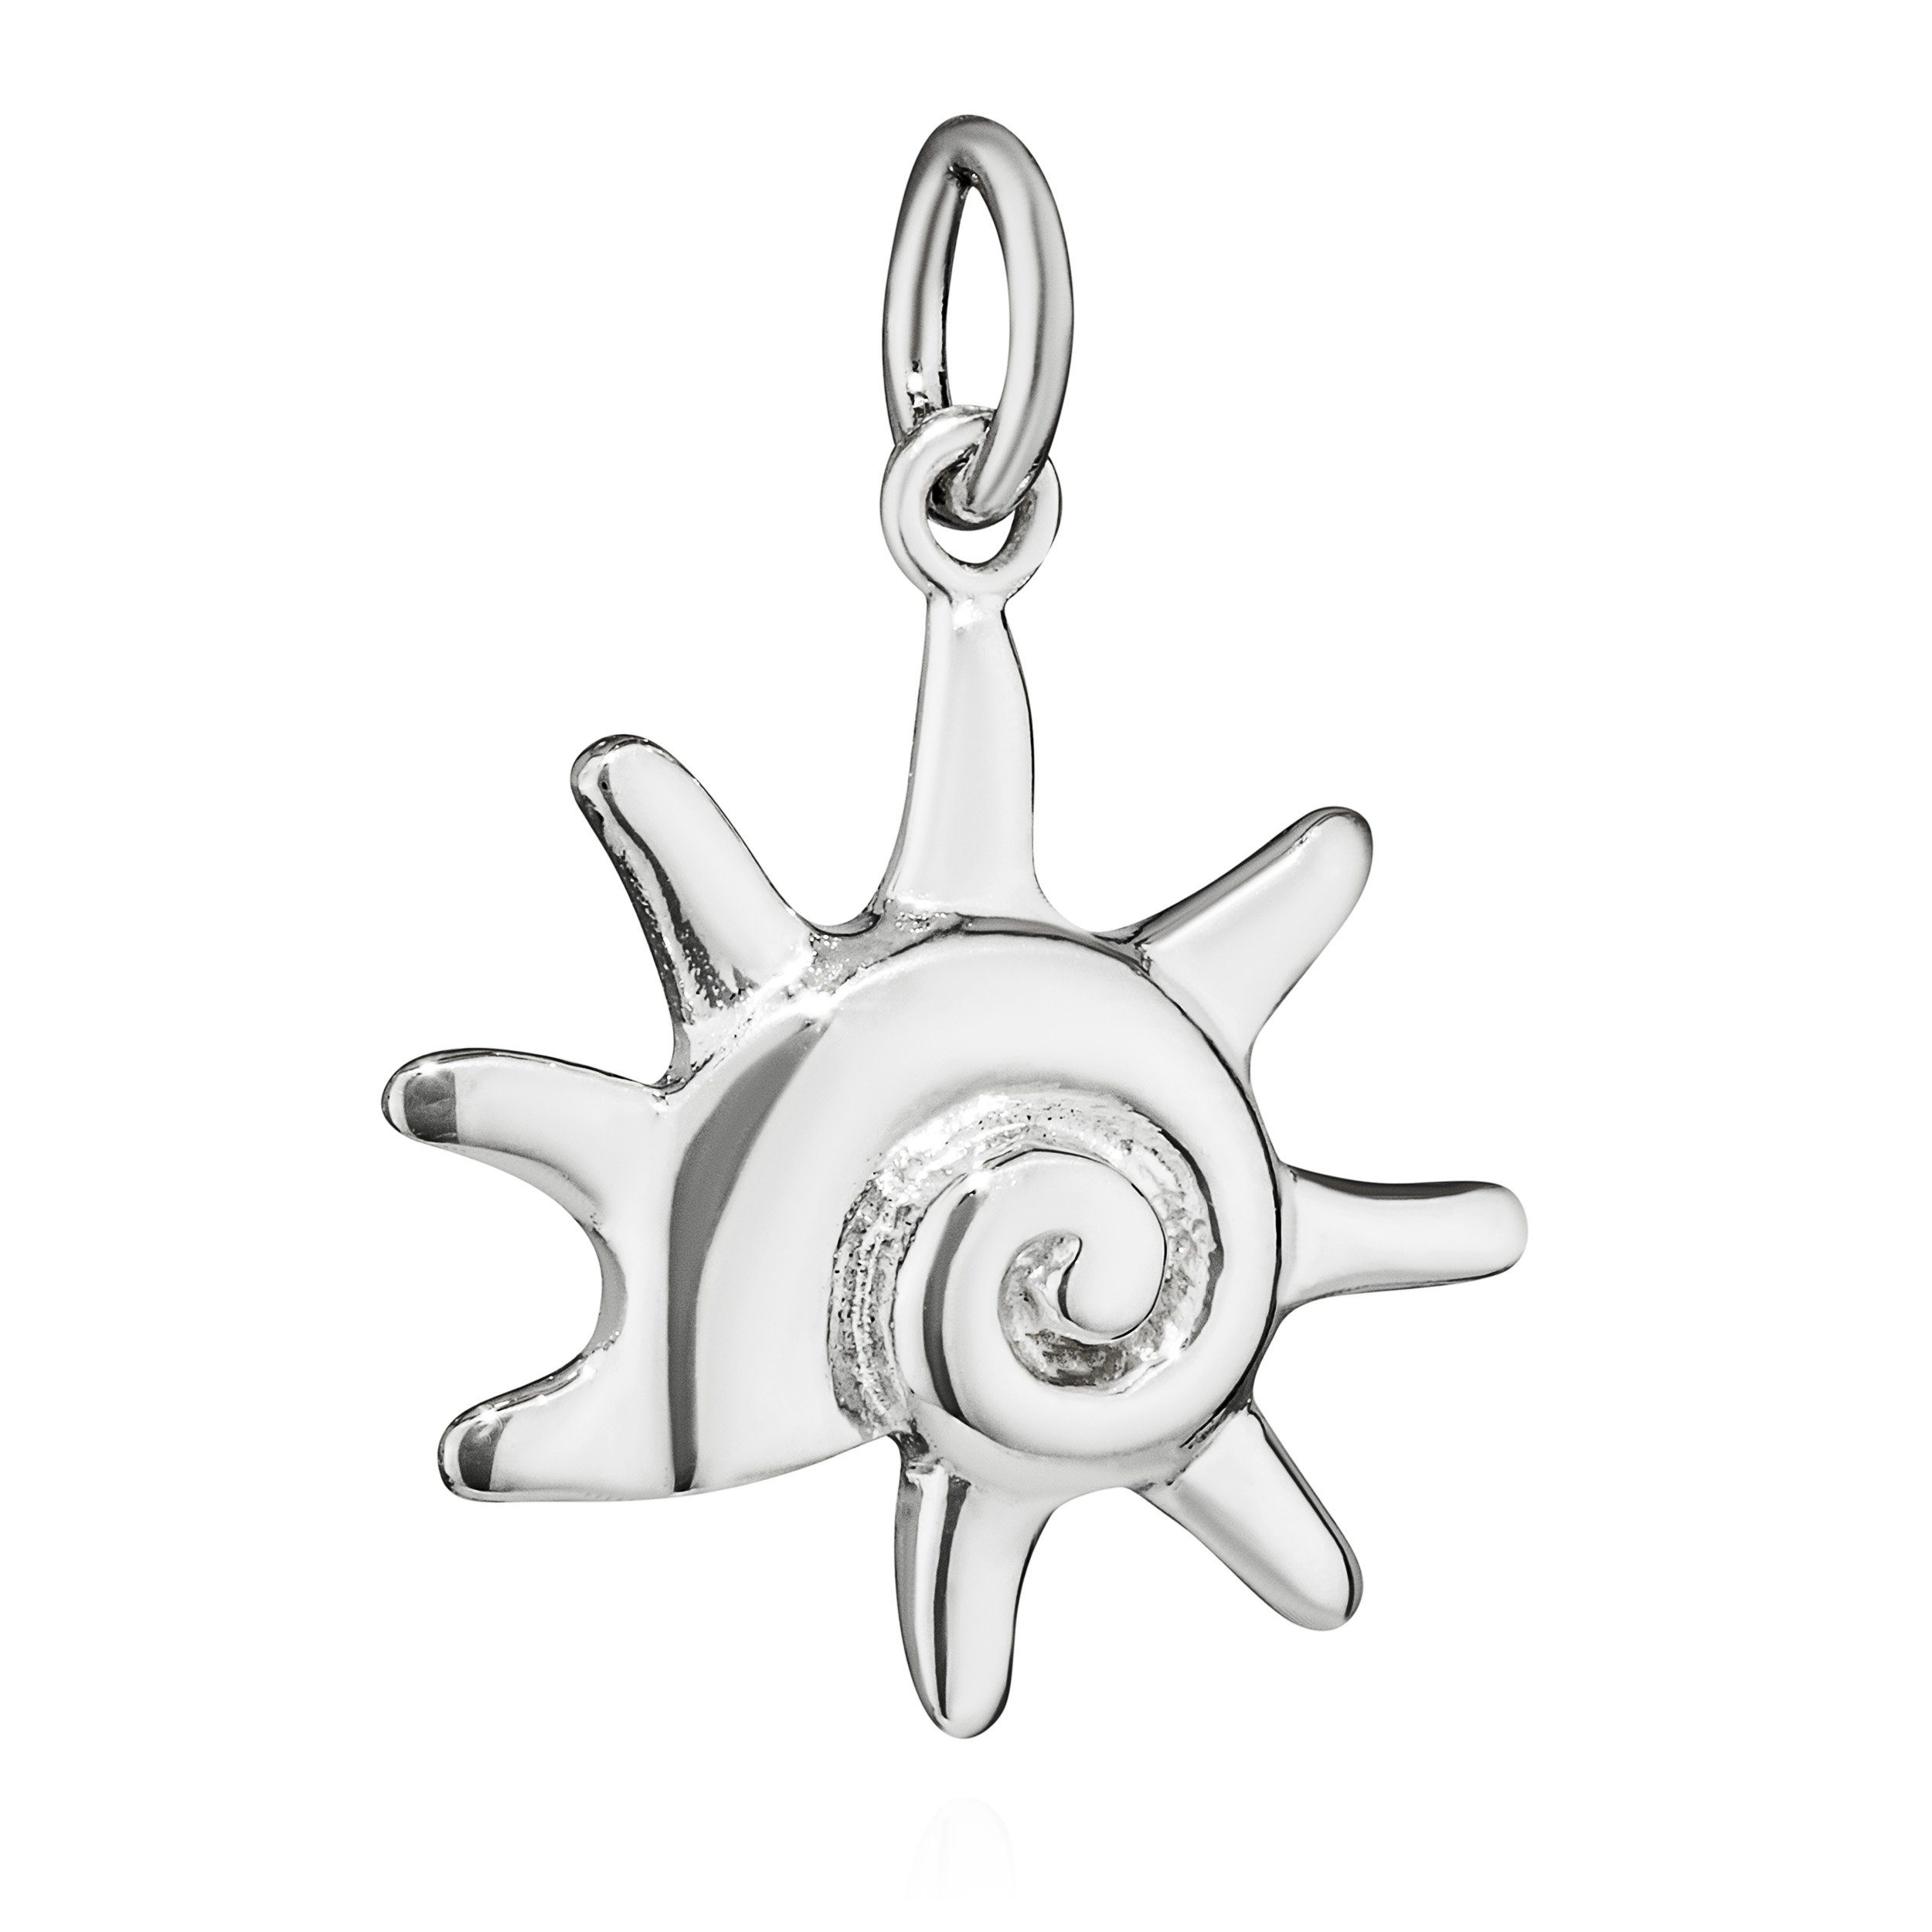 NKlaus Kettenanhänger 2x2cm Kettenanhänger groß Sonnenspirale 925 Silber Kettencharm-Anhänge